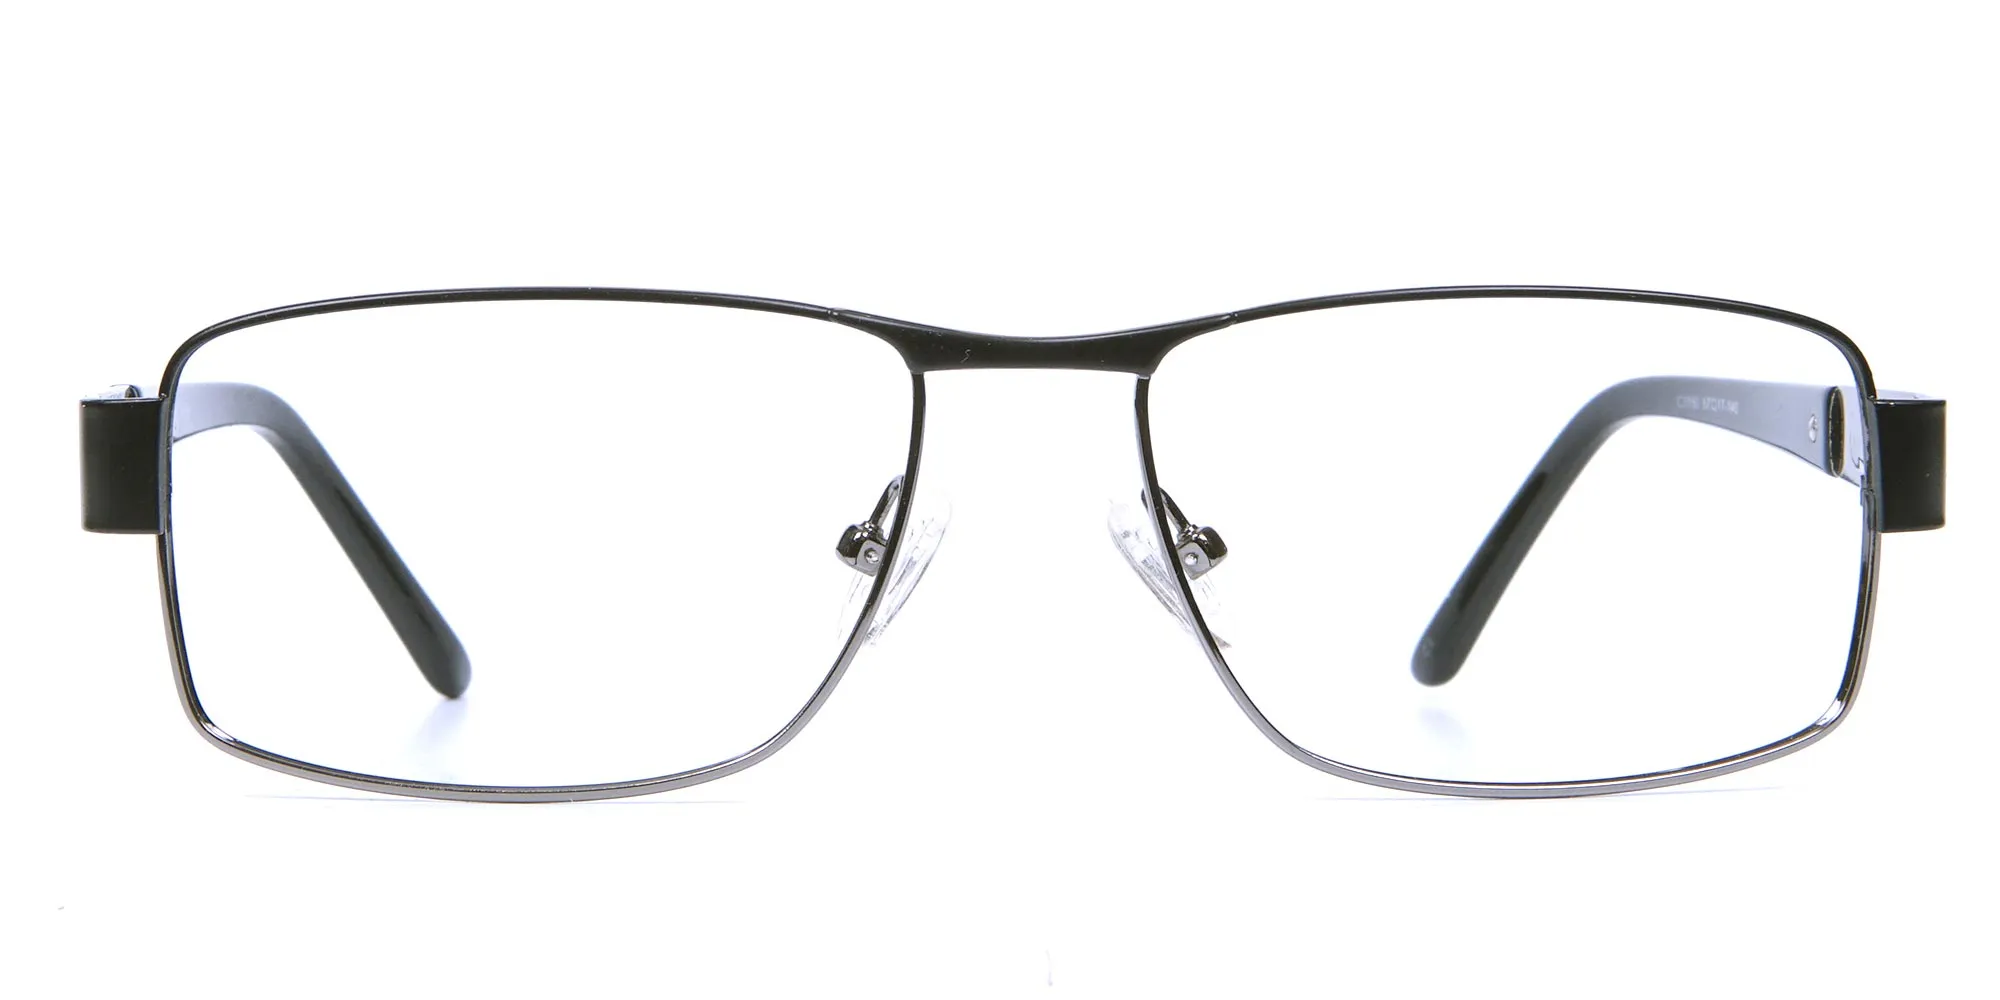 Black & Gunmetal Glasses -2